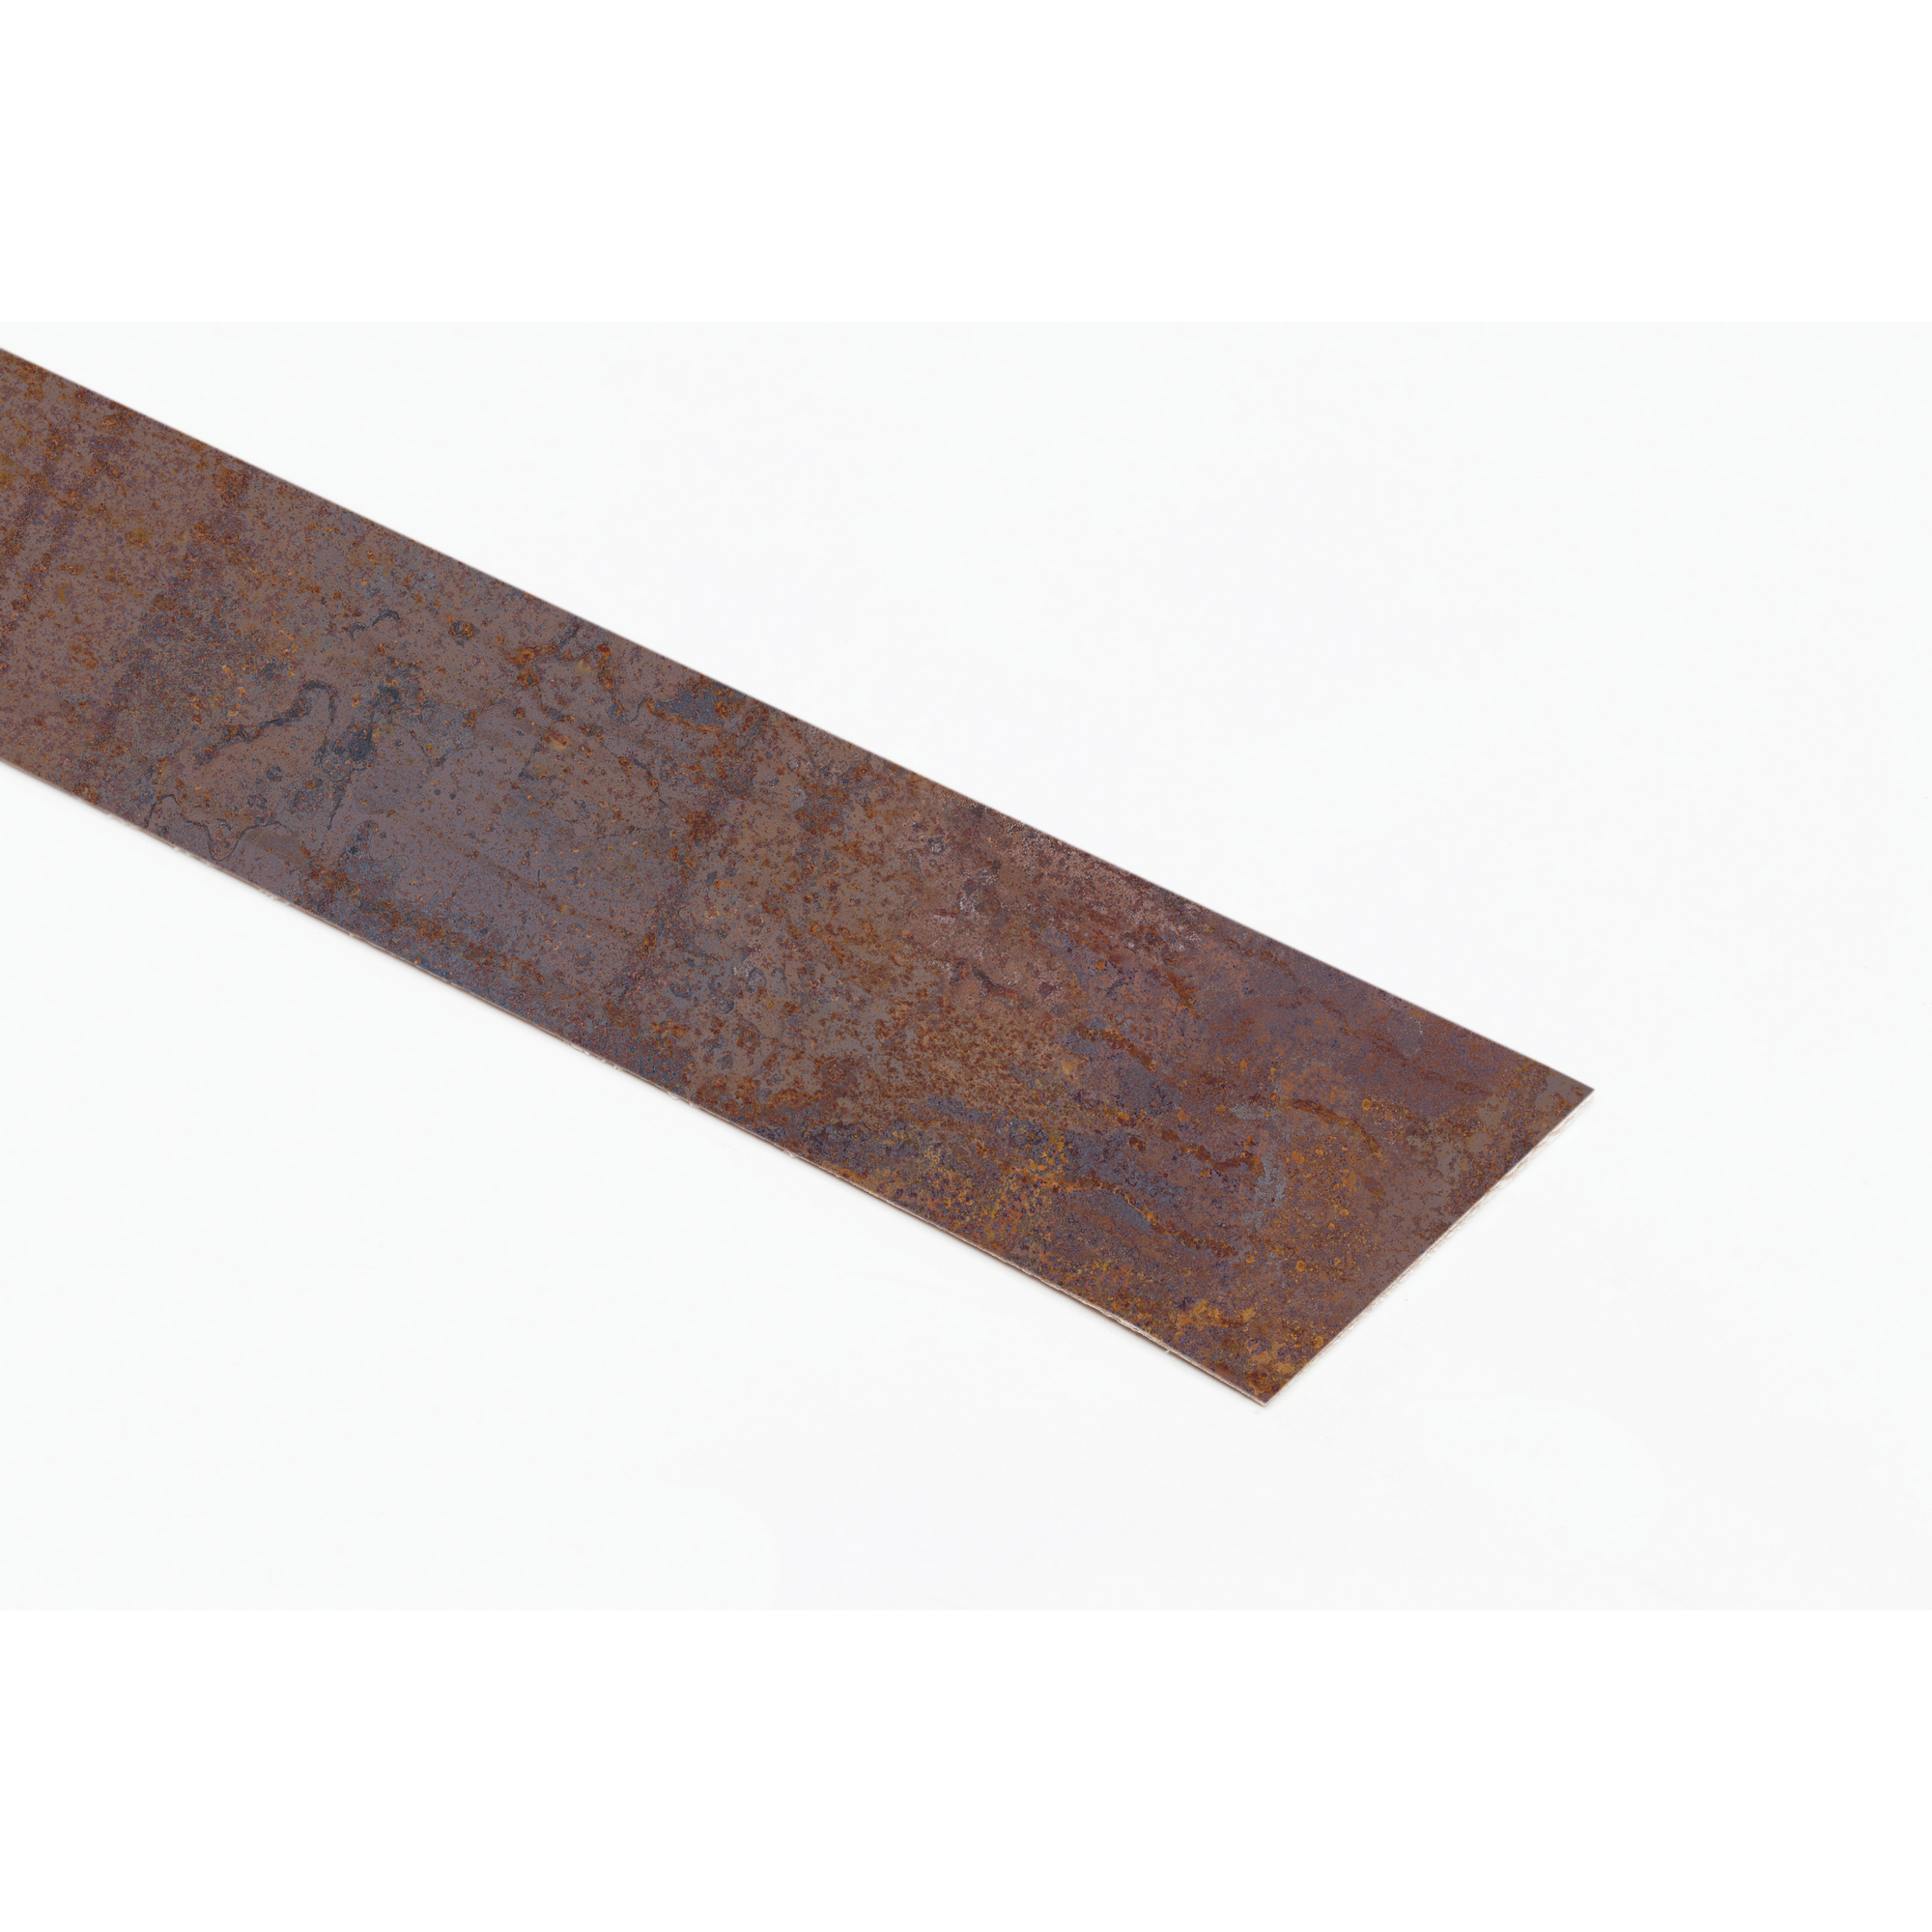 Bügelkante 'K4398 Rusty Iron' rostbraun 4,5 x 65 cm + product picture